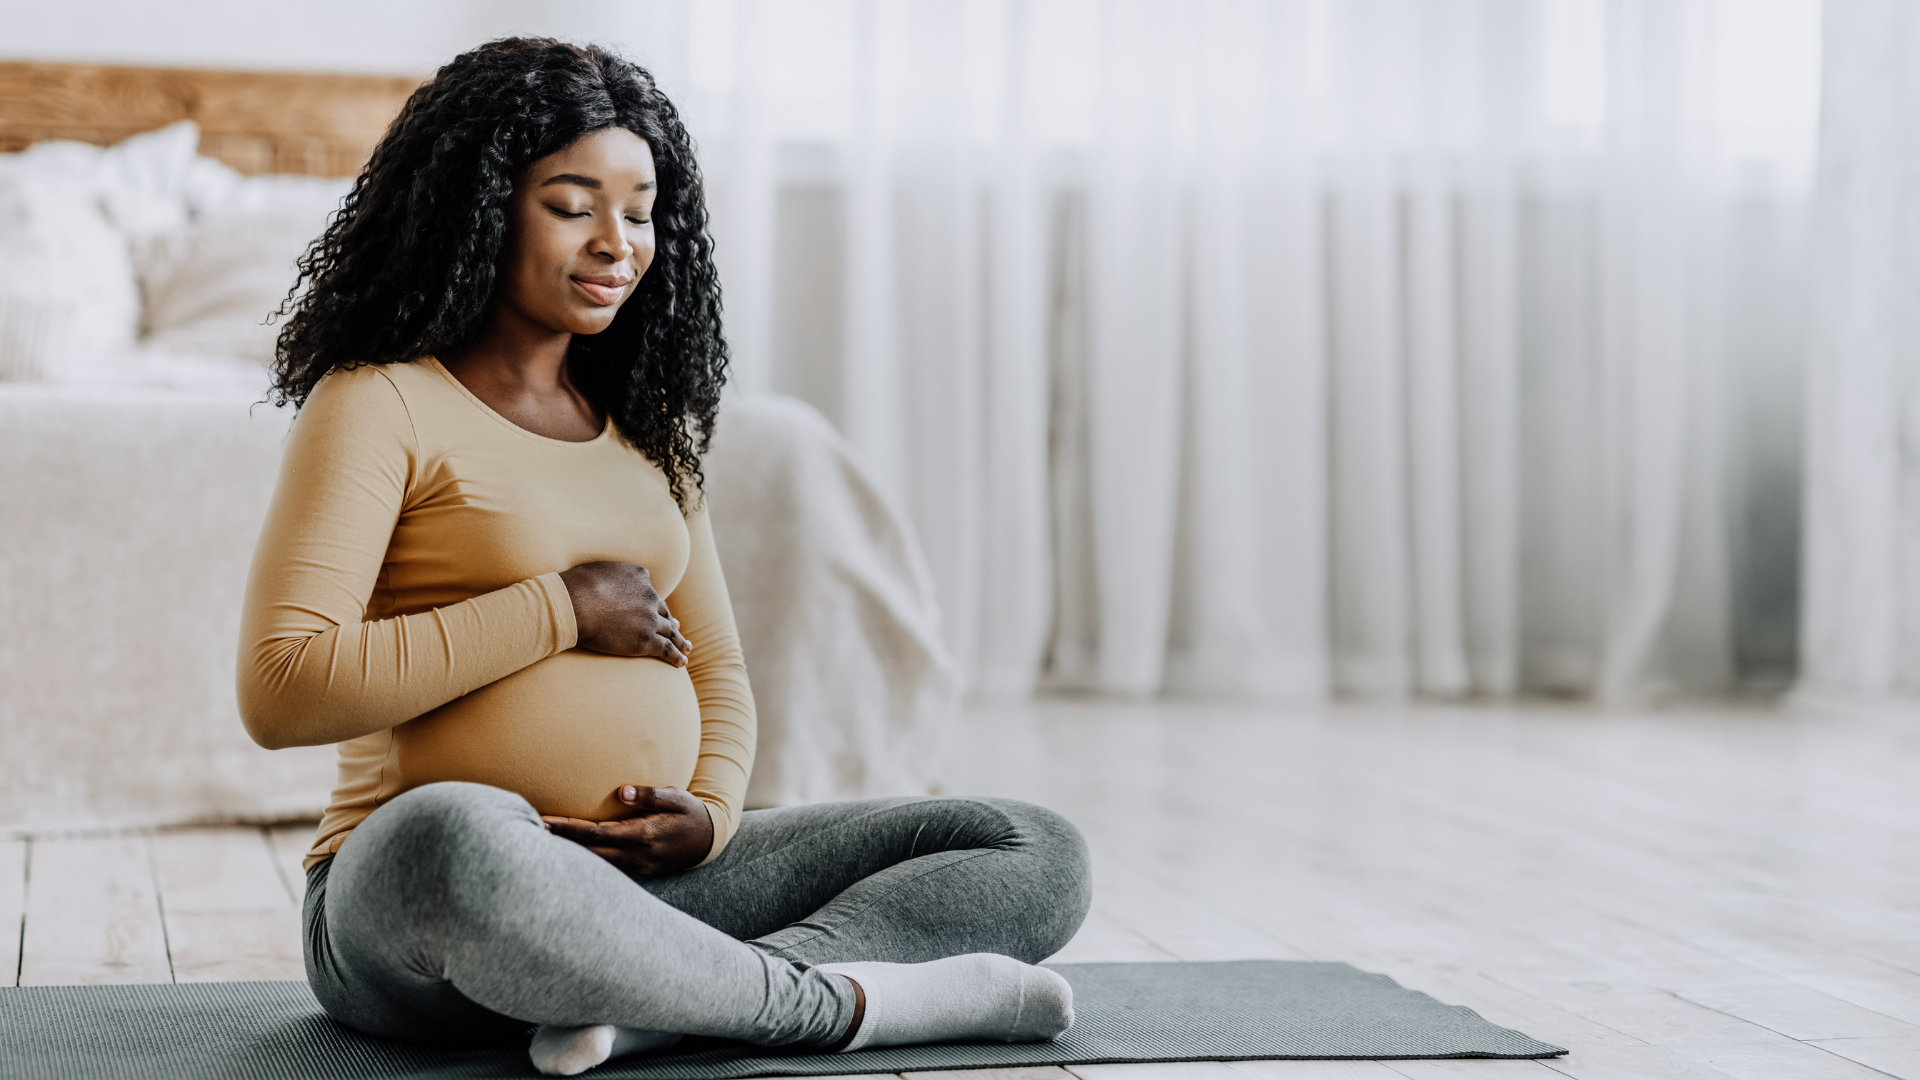 Yoga for a Healthy Pregnancy